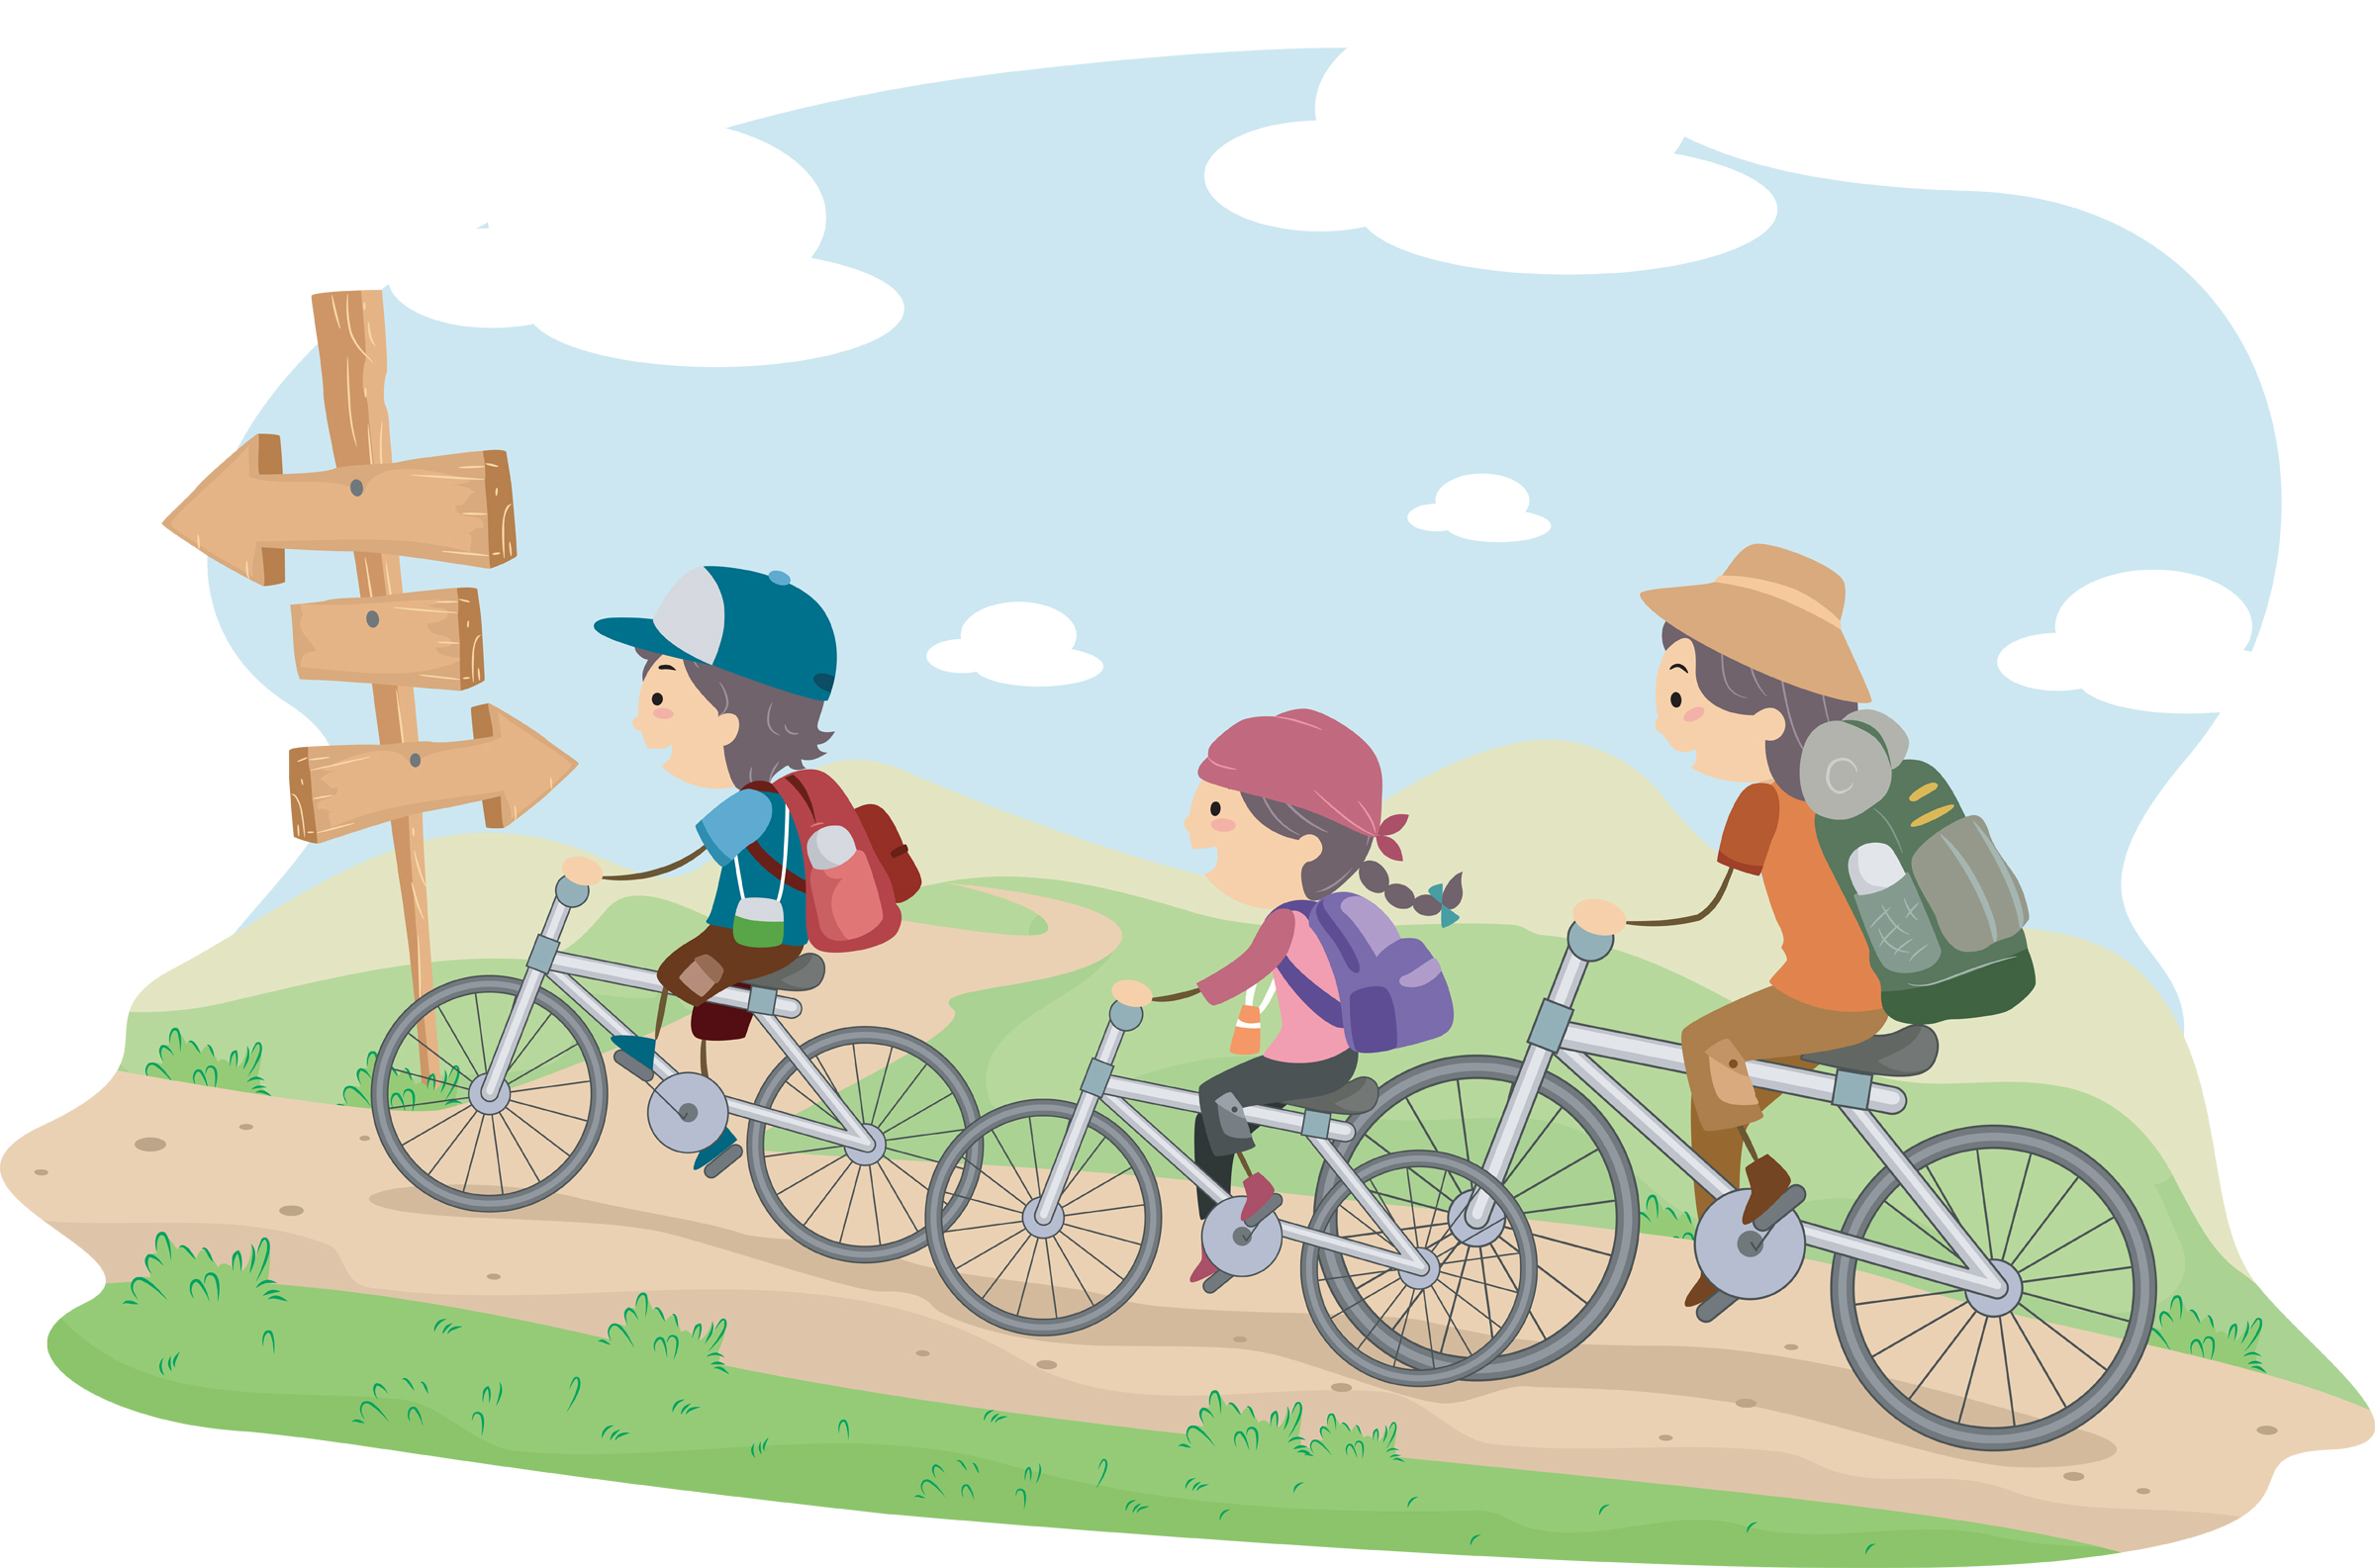 https://youthzone.com/wp-content/uploads/2013/04/kids-biking.jpg